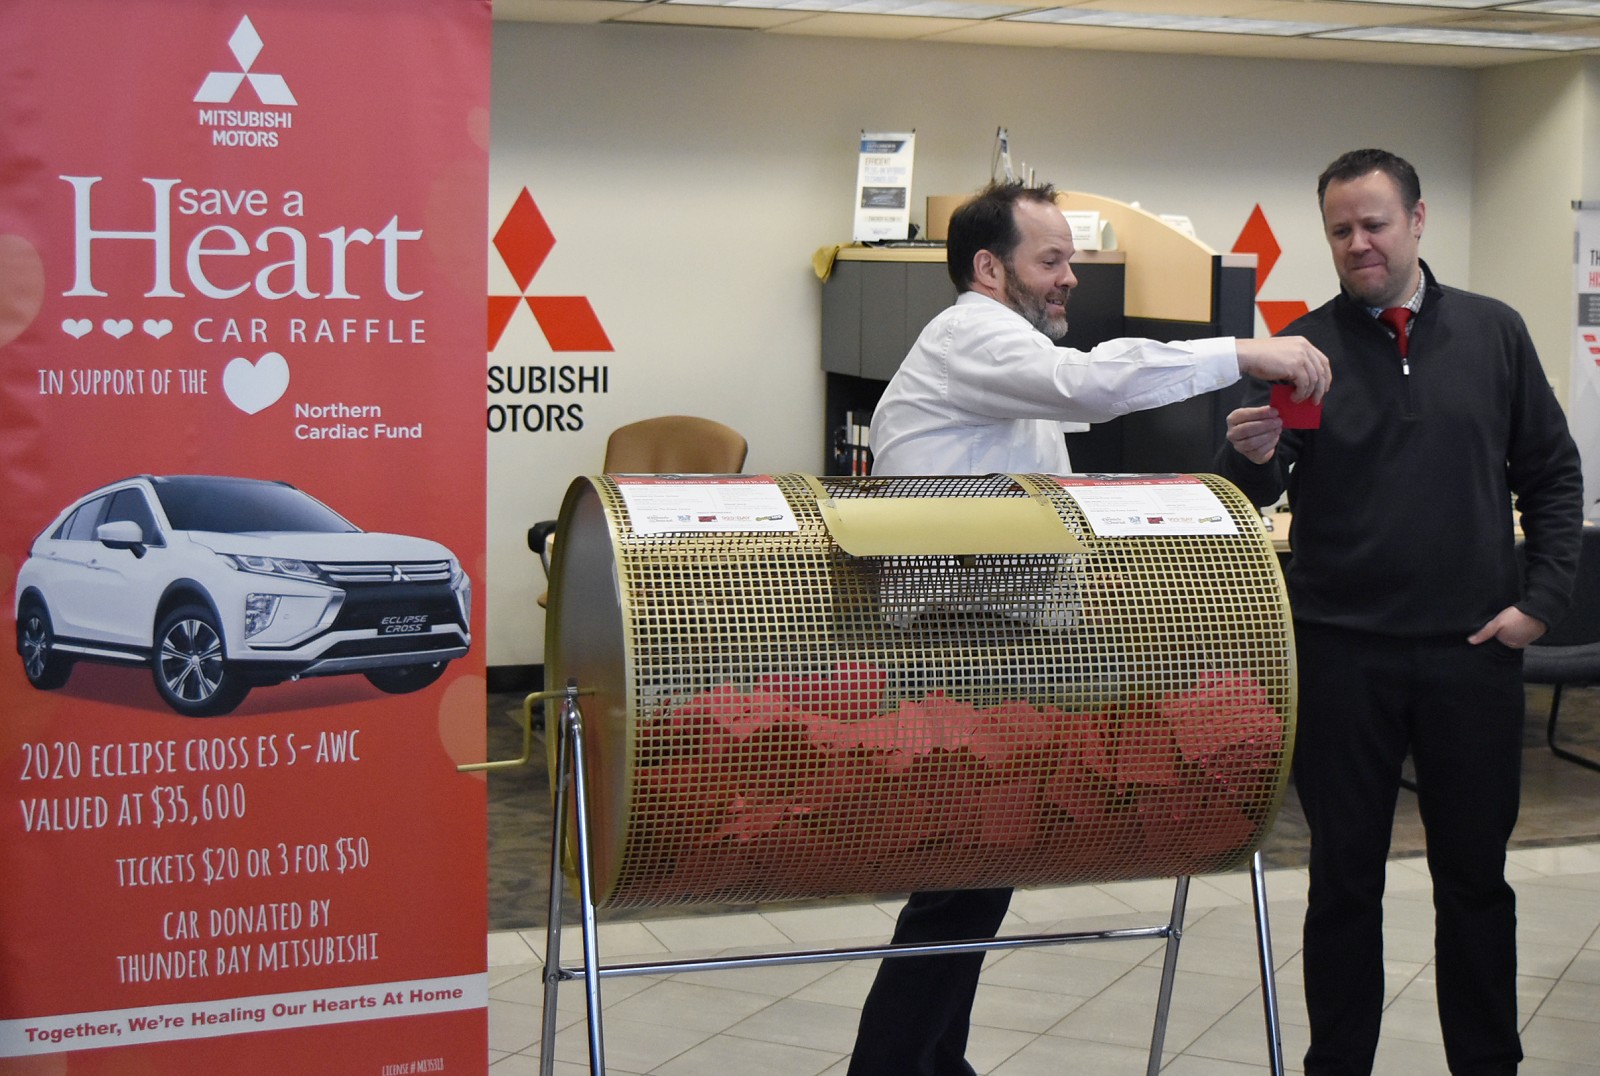 Save a Heart Car Raffle Winner Announced!